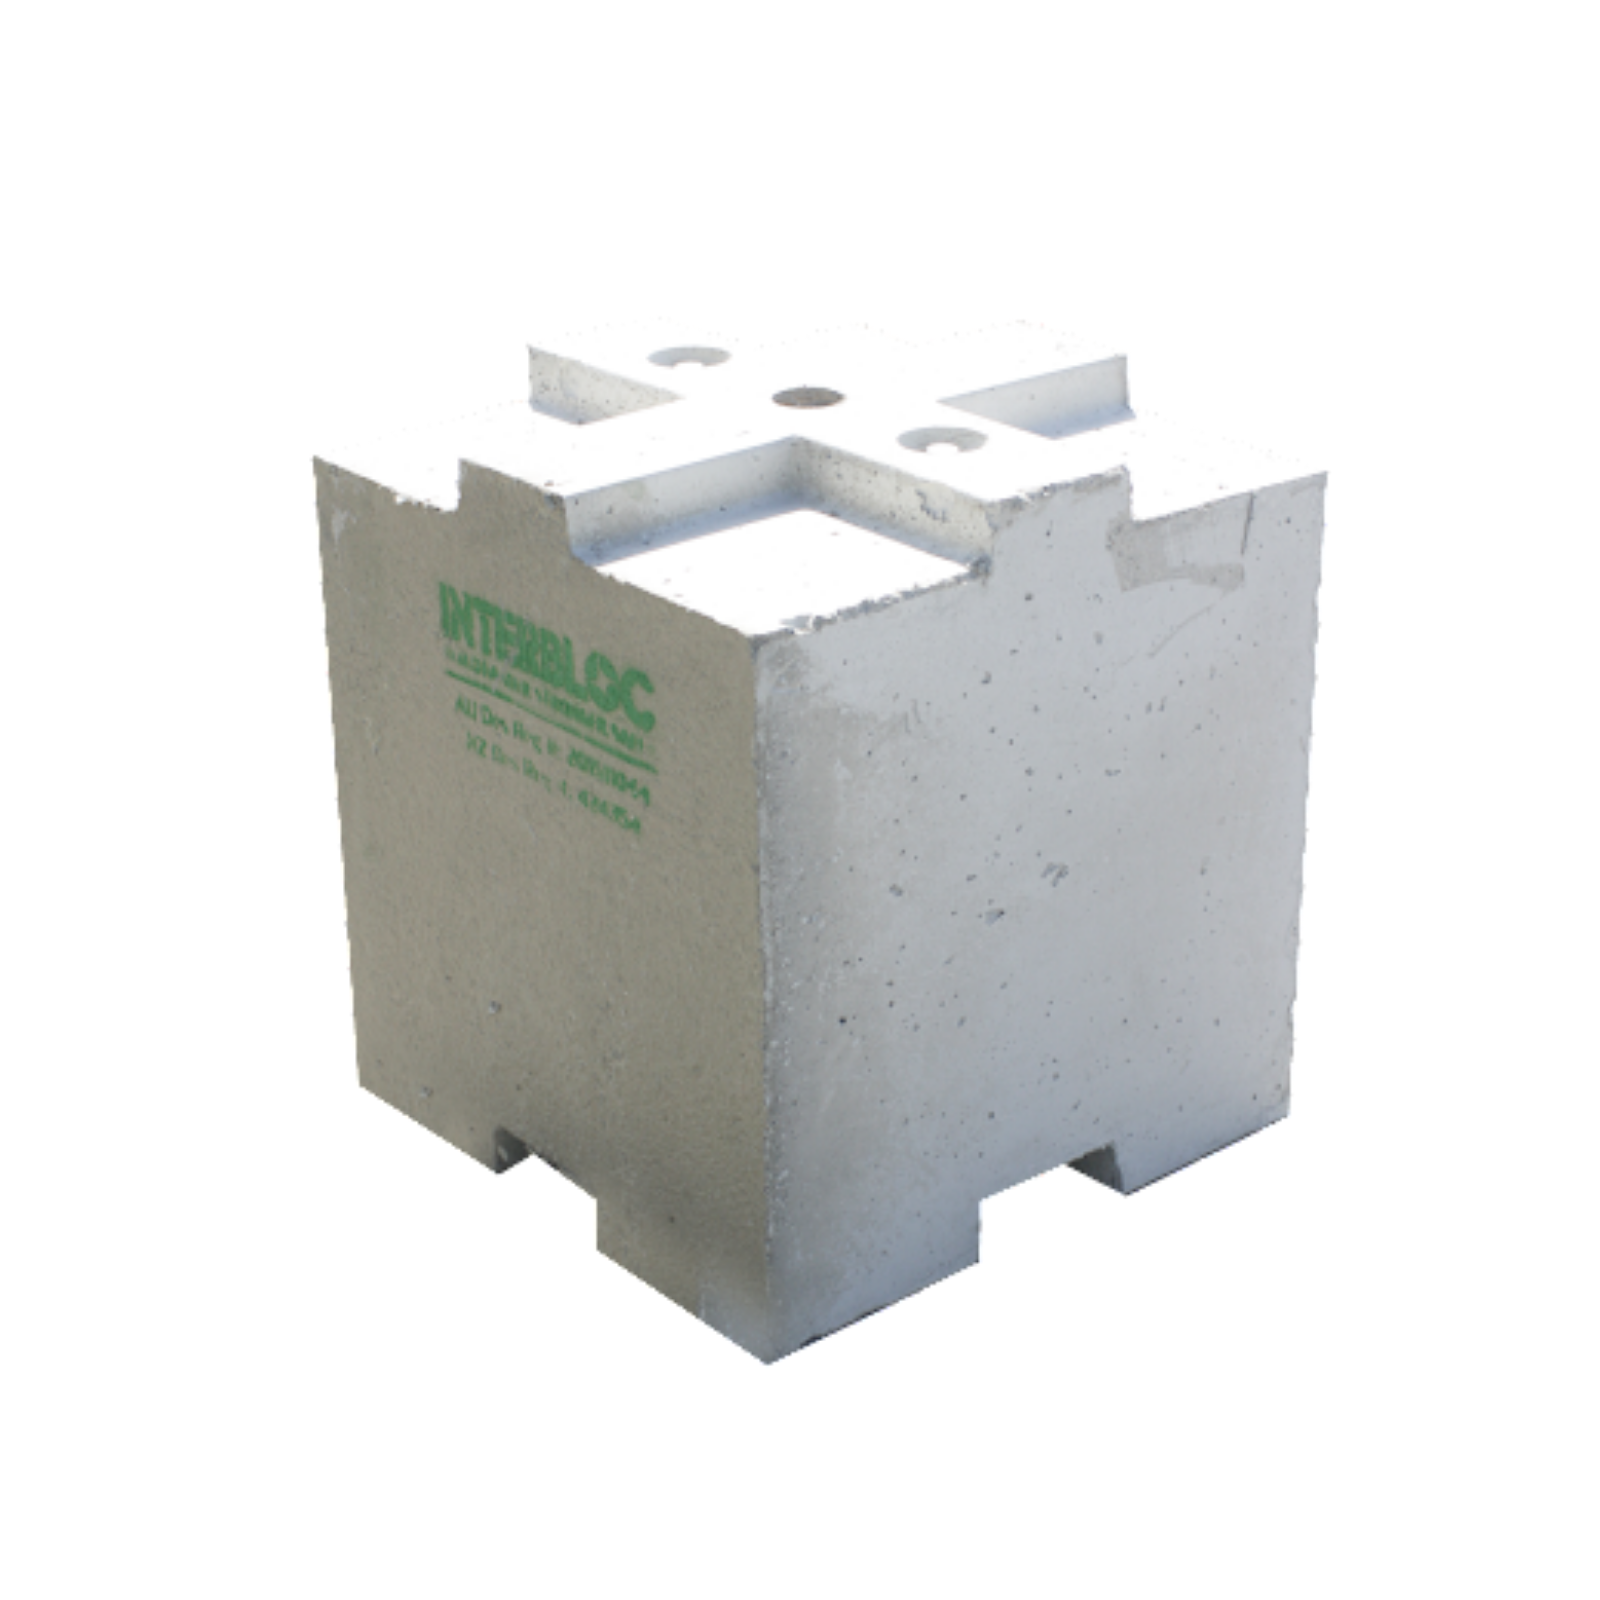 400 Standard Interbloc concrete block